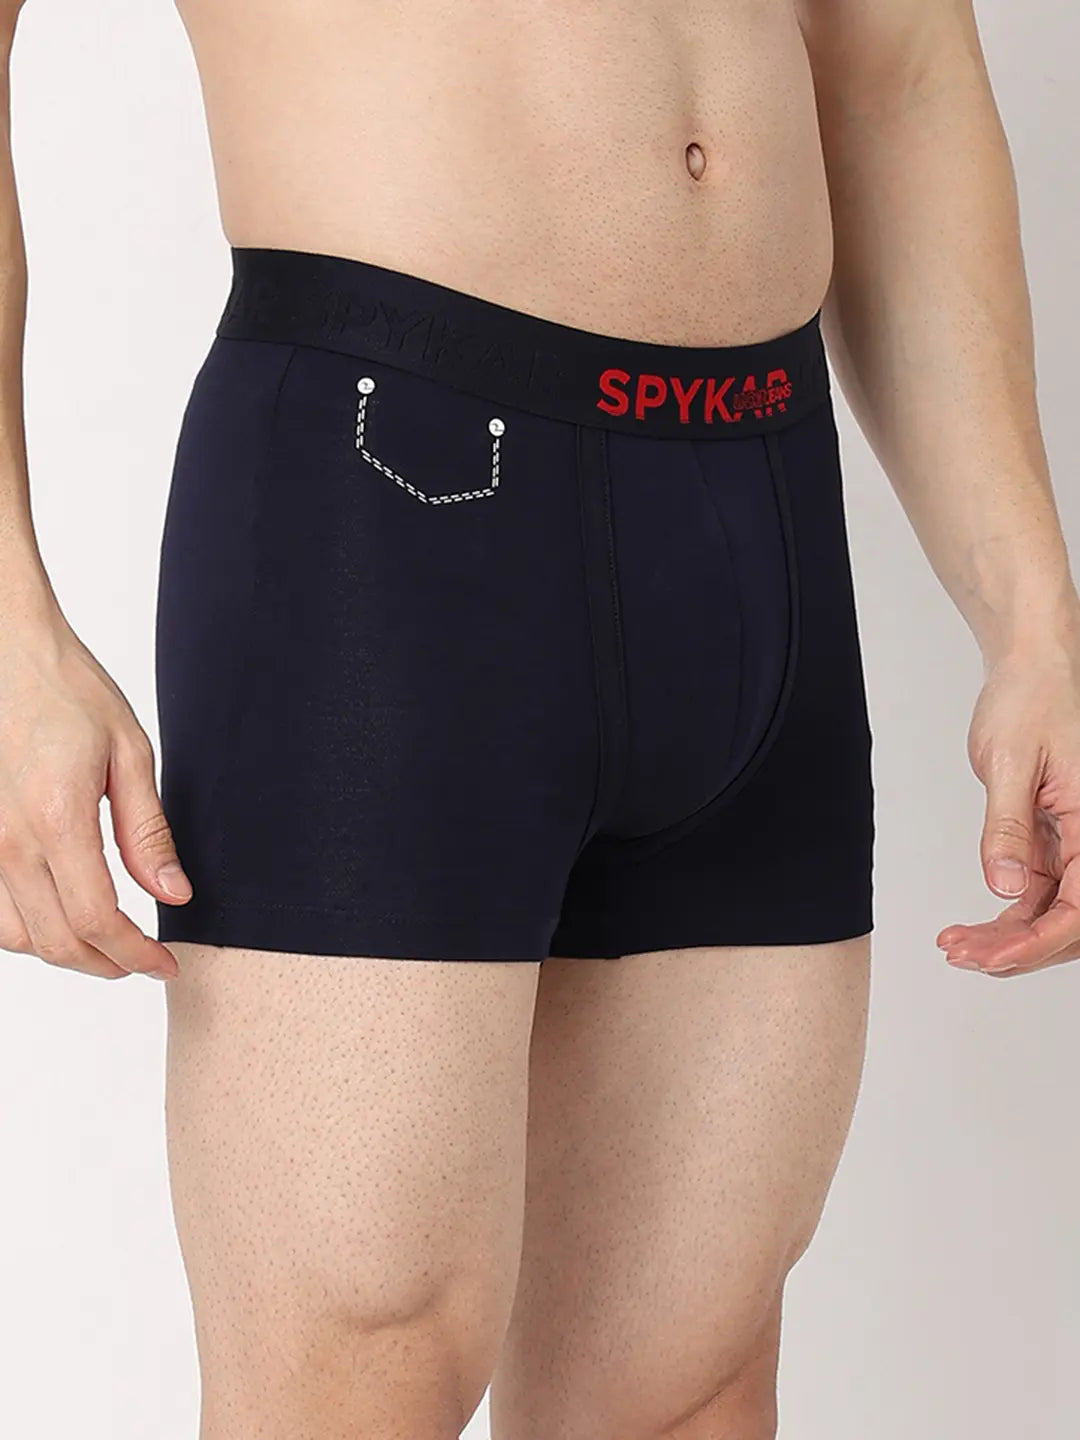 Underjeans by Spykar Men Premium Navy & Olive Cotton Blend Regular Fit Trunk - Pack Of 2